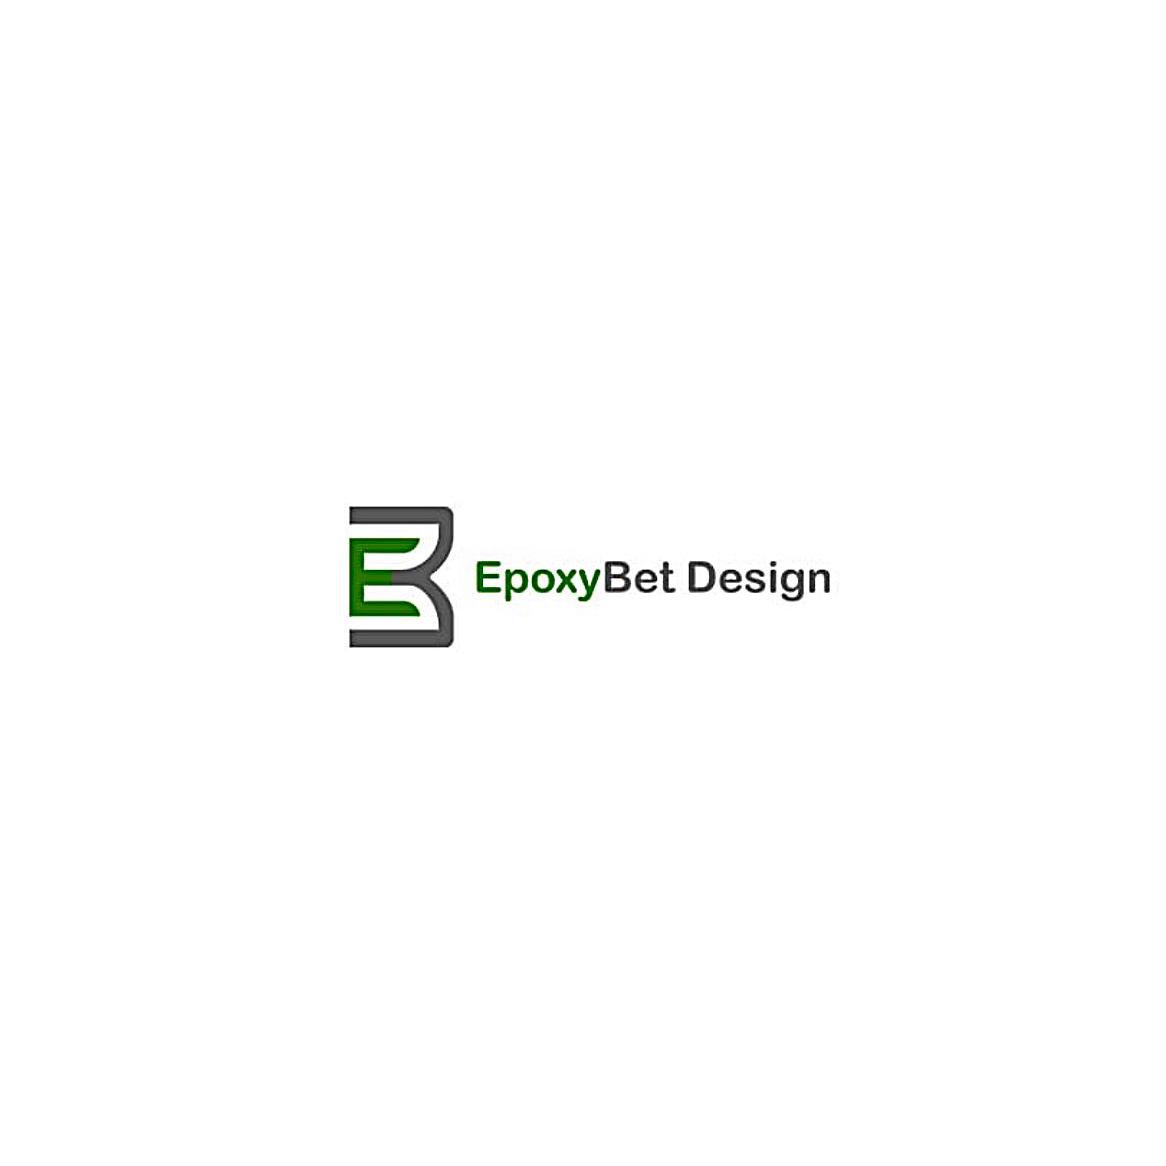 Epoxy Bet Design Logo